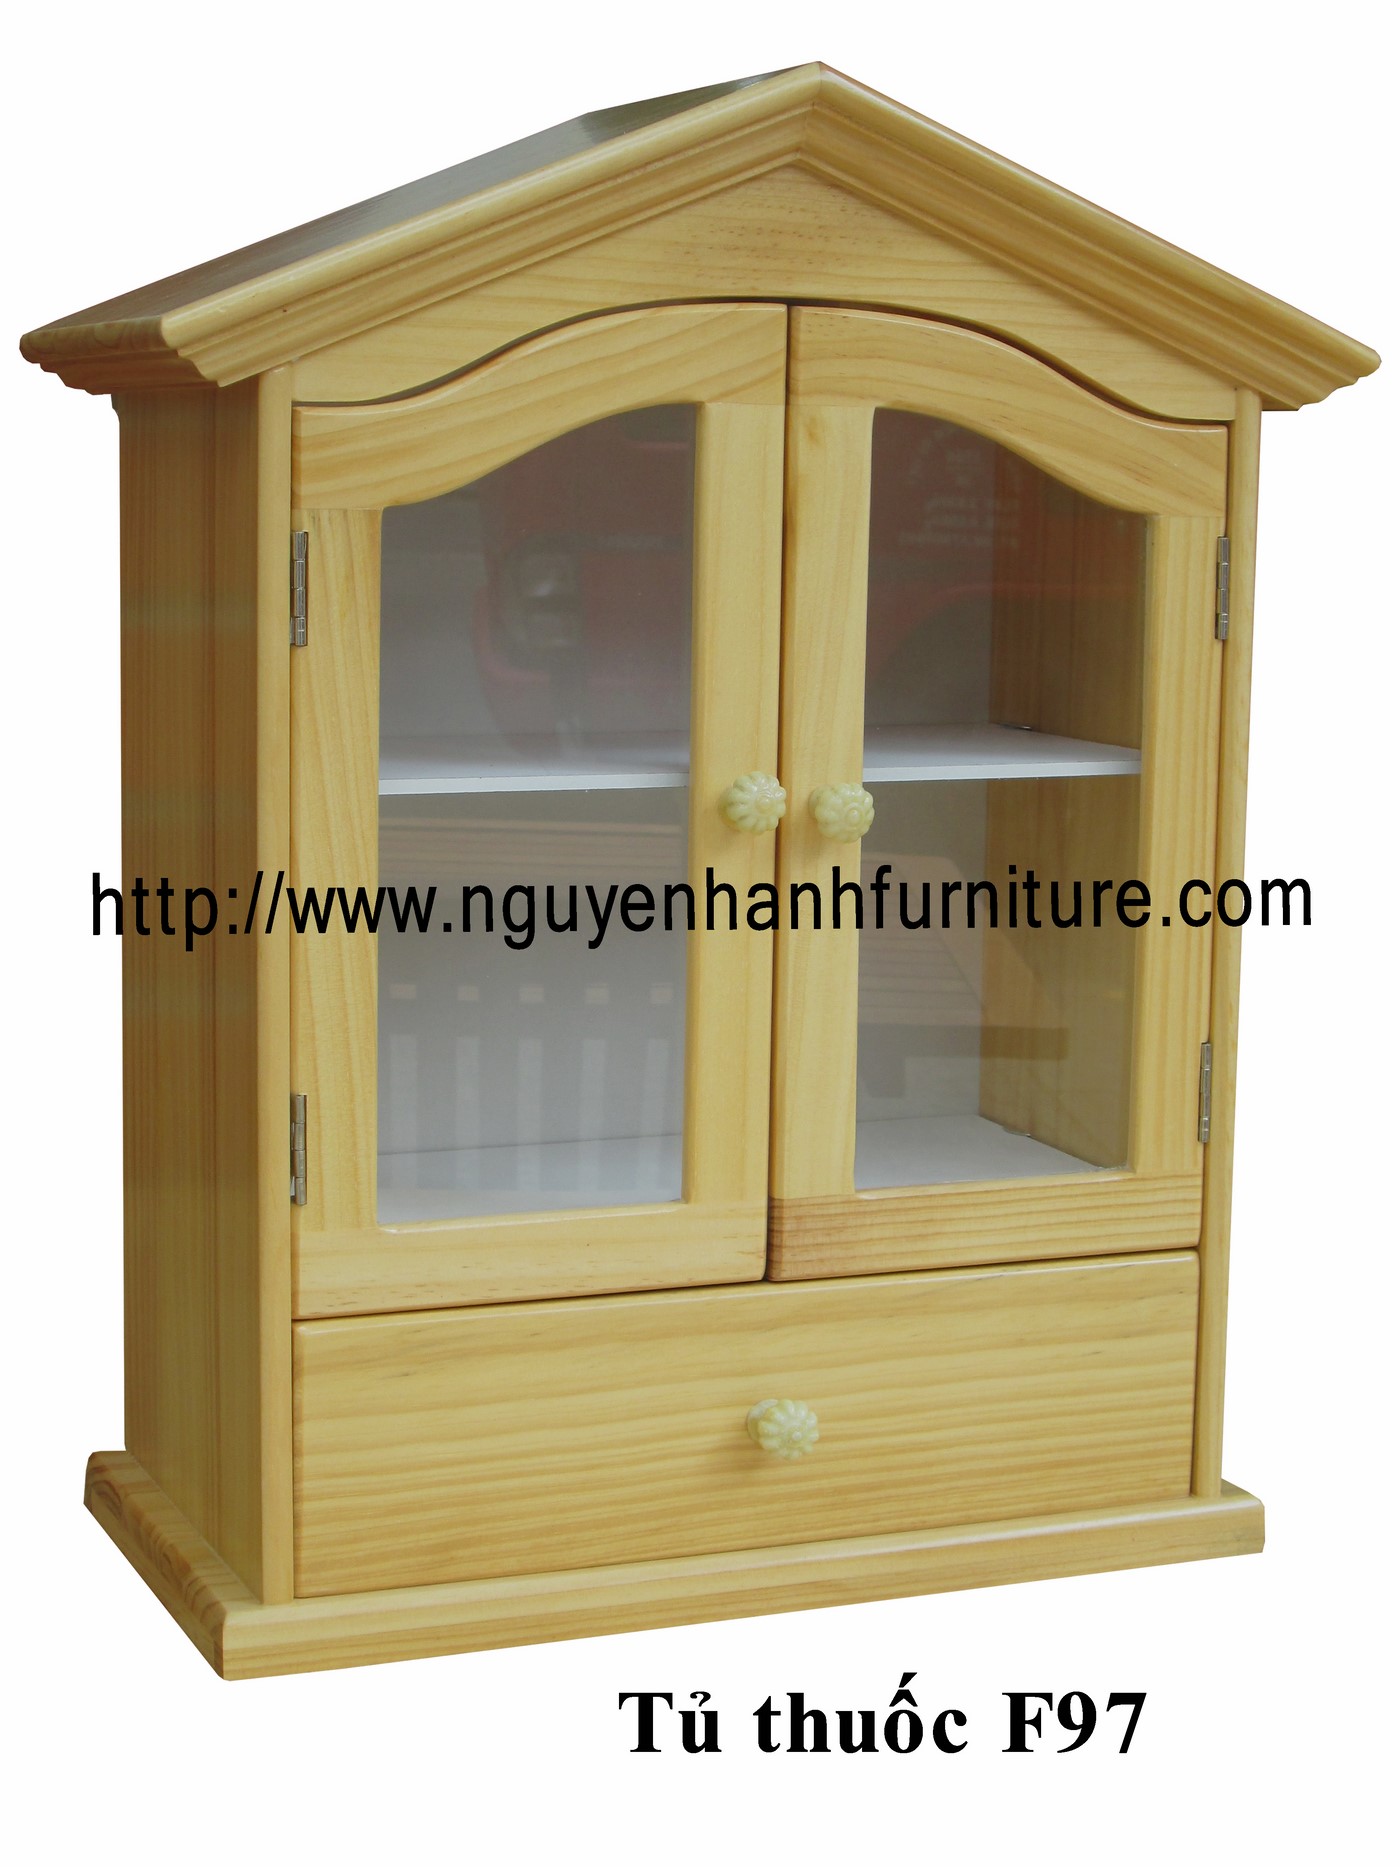 Name product: Medicine cabinet F97 - Dimensions: - Description: Natural pine wood